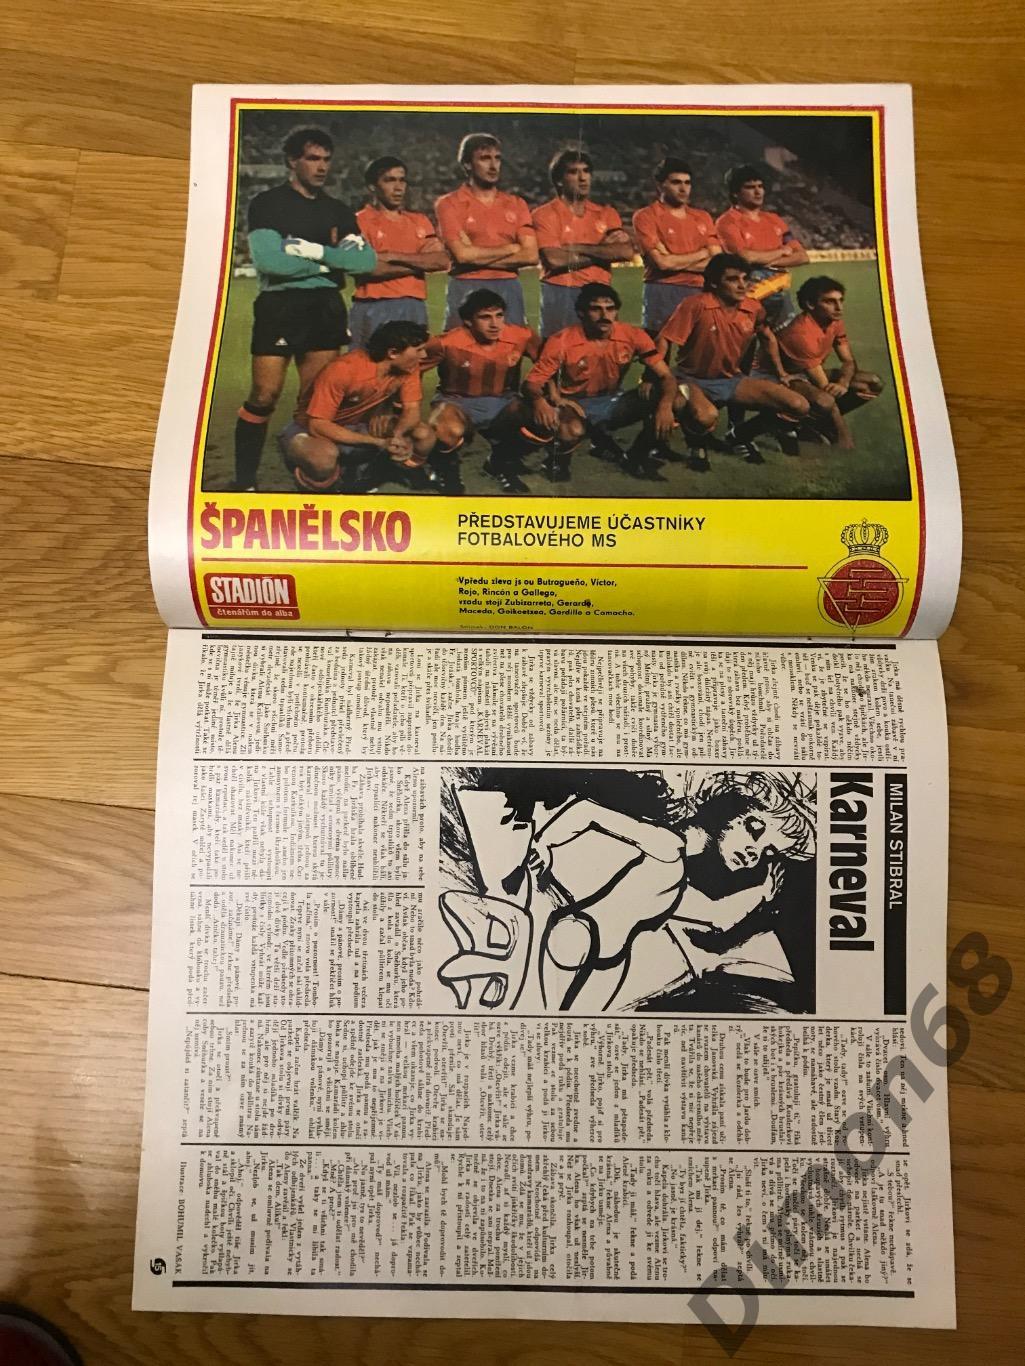 стадион номер 7 1986г постер сб испании 1